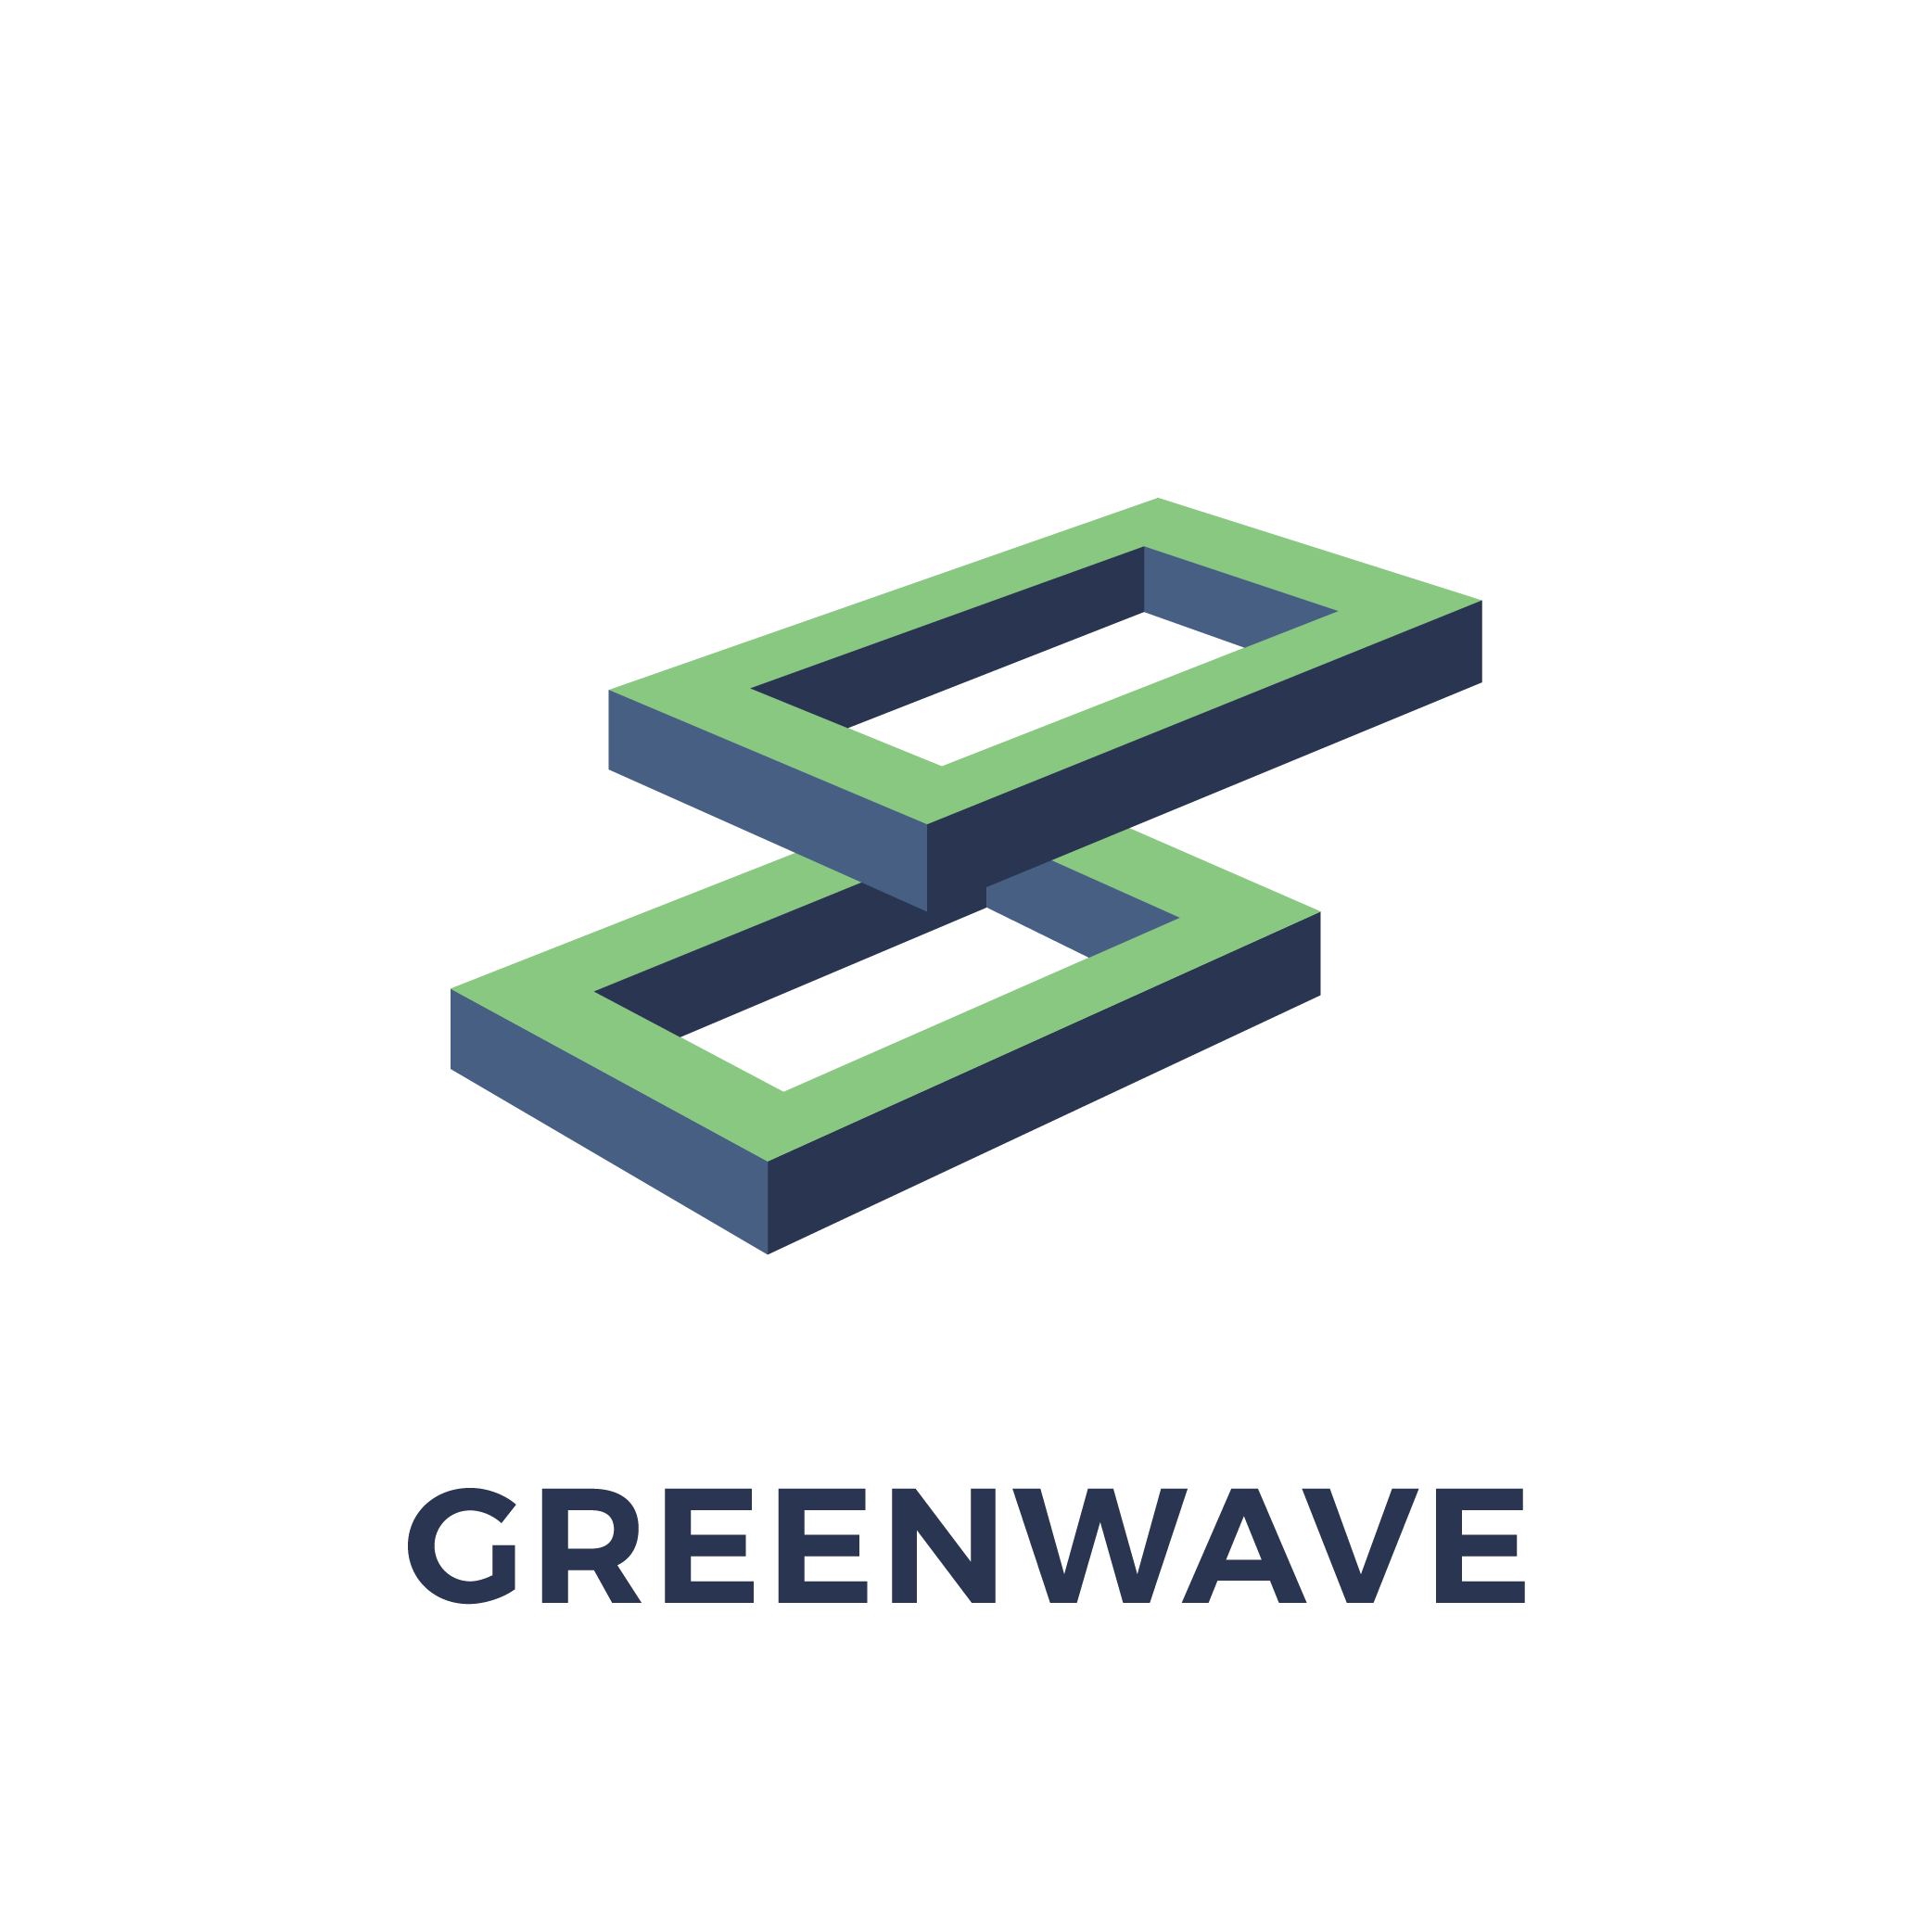 Greenwave logo - color